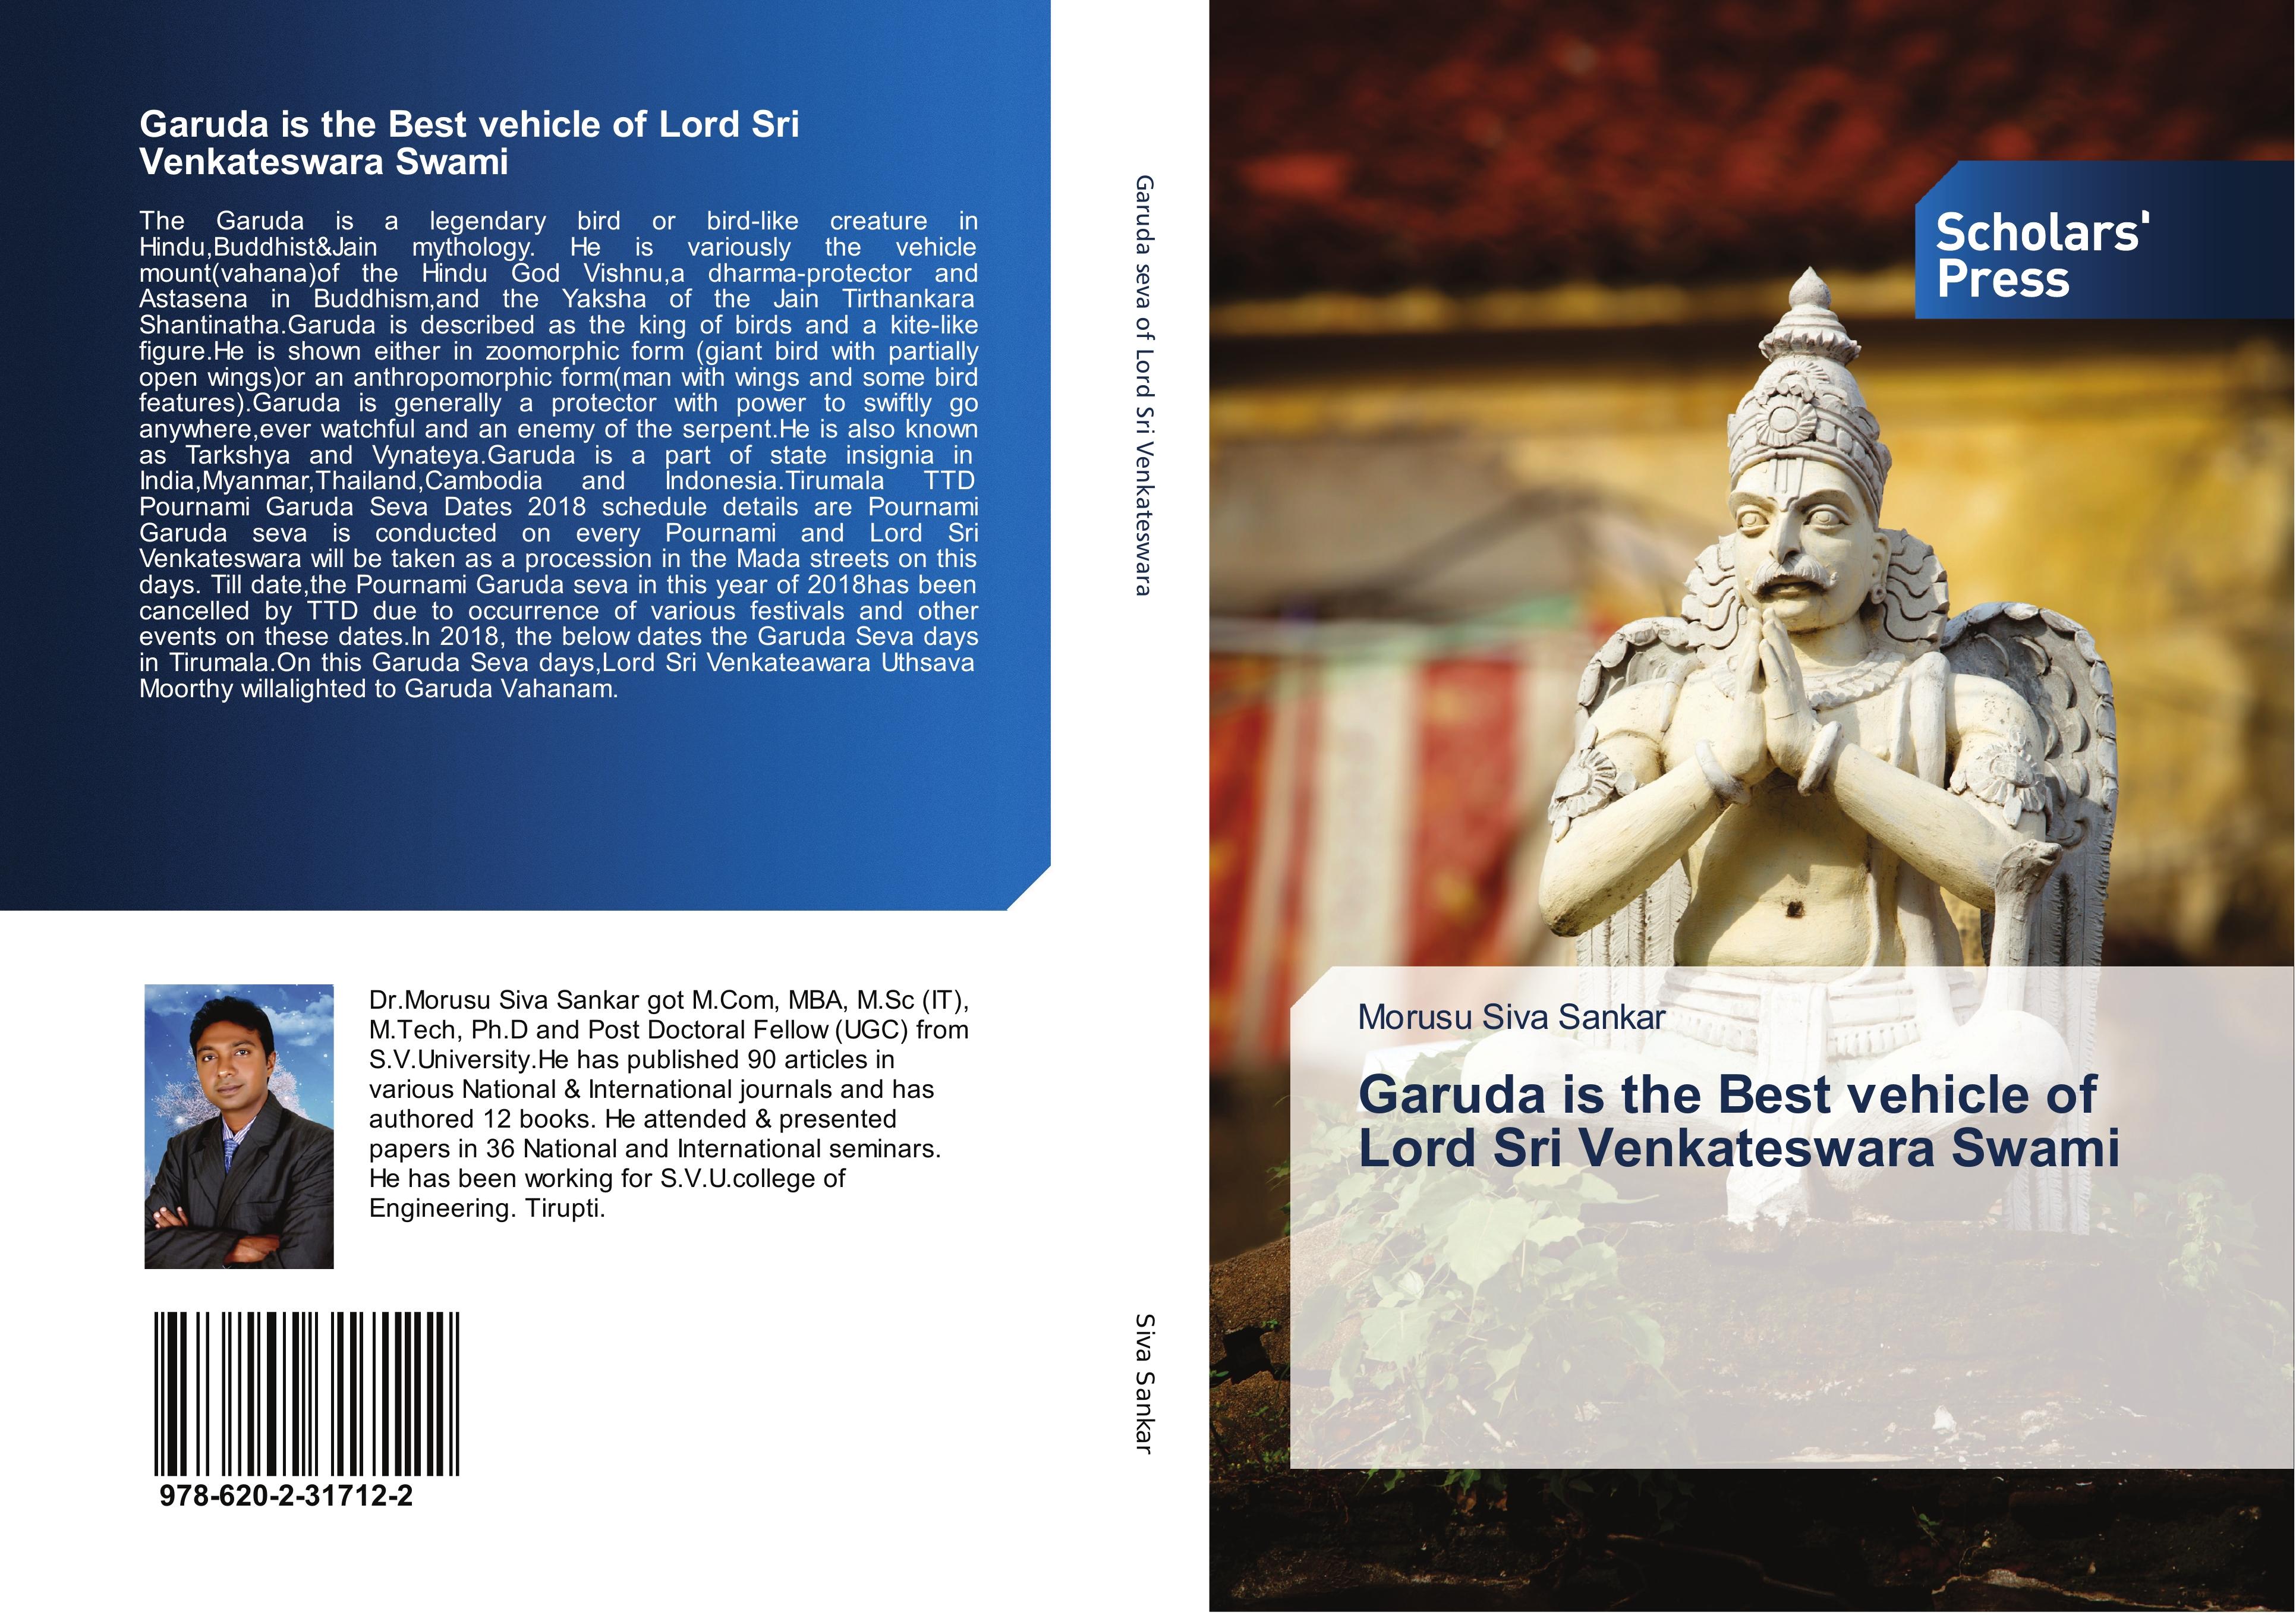 Garuda is the Best vehicle of Lord Sri Venkateswara Swami - Morusu Siva Sankar